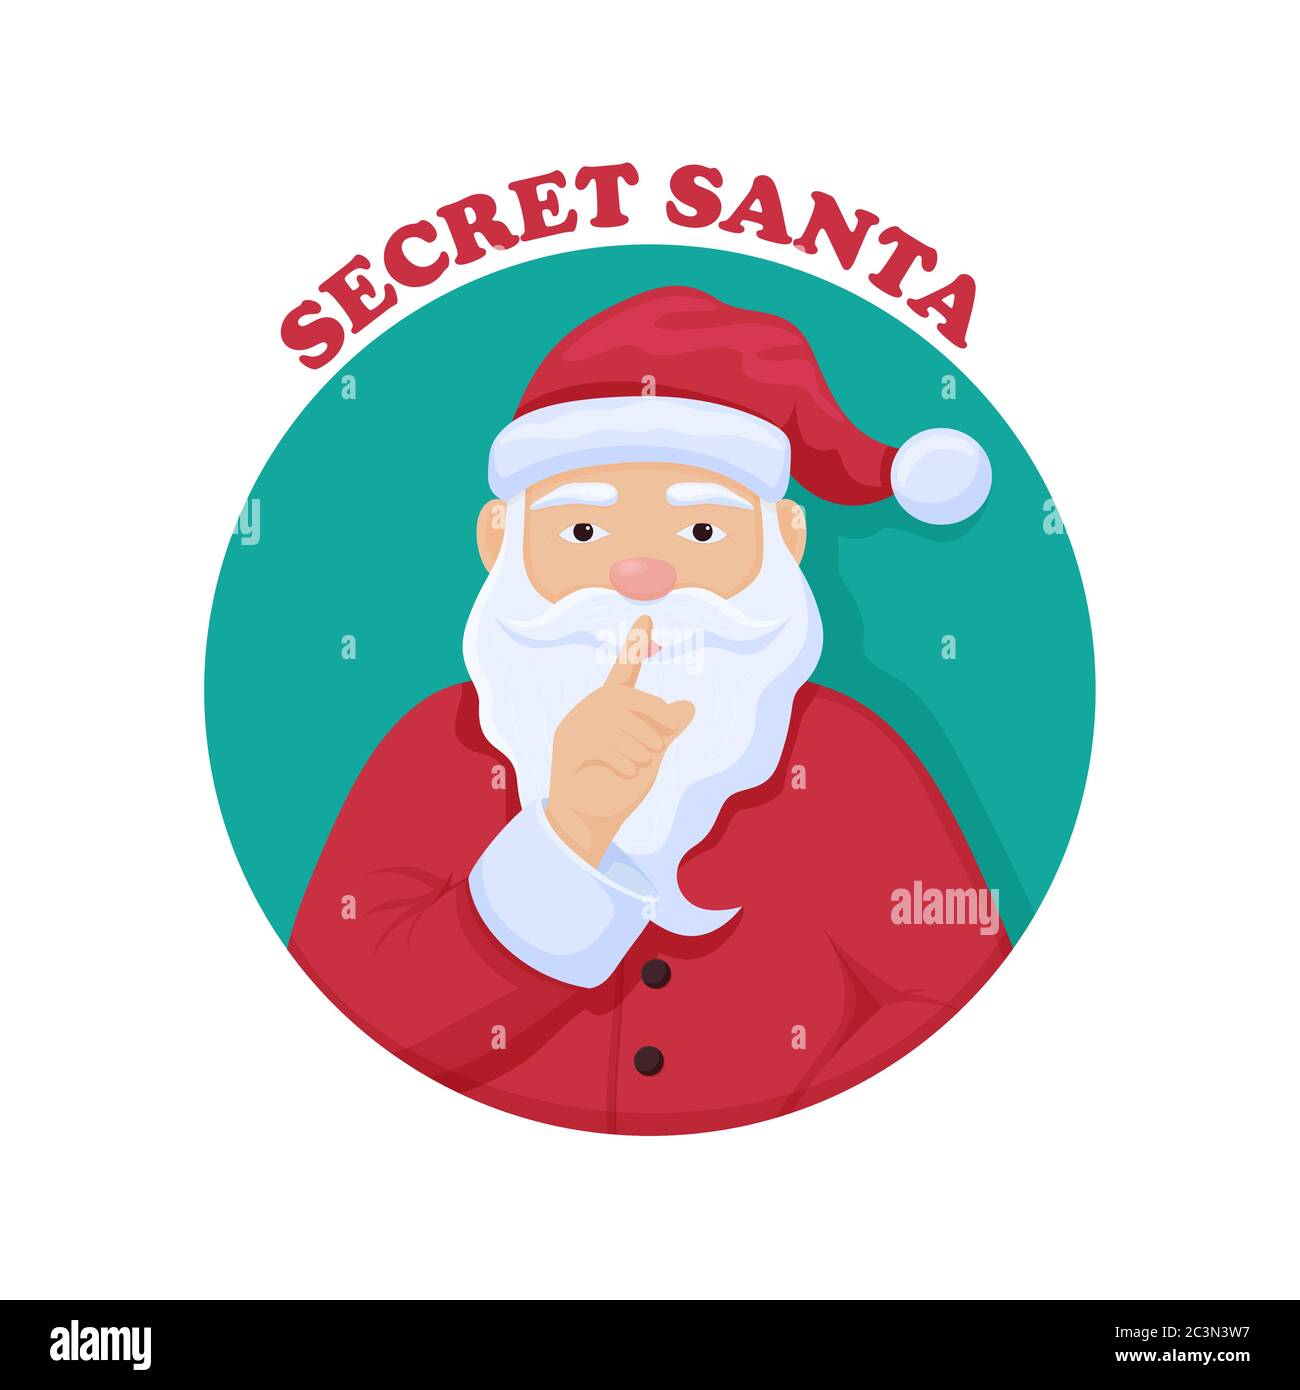 Secret Santa Chris Kindle. Merry Christmas anonymous gift exchange ceremony mysterious Santa. Stock Vector